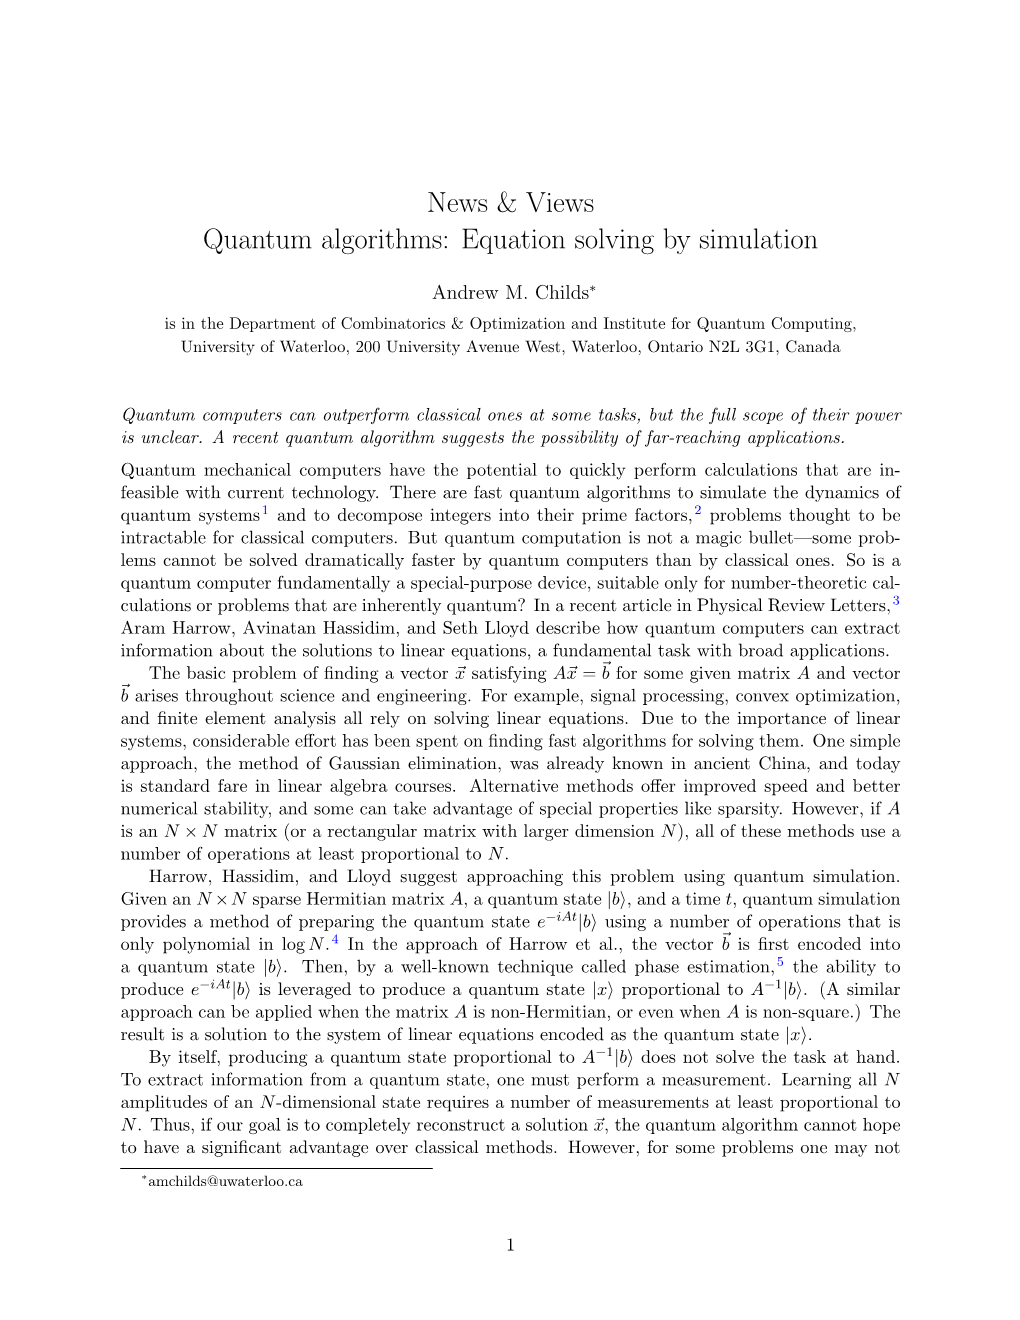 News & Views Quantum Algorithms: Equation Solving by Simulation